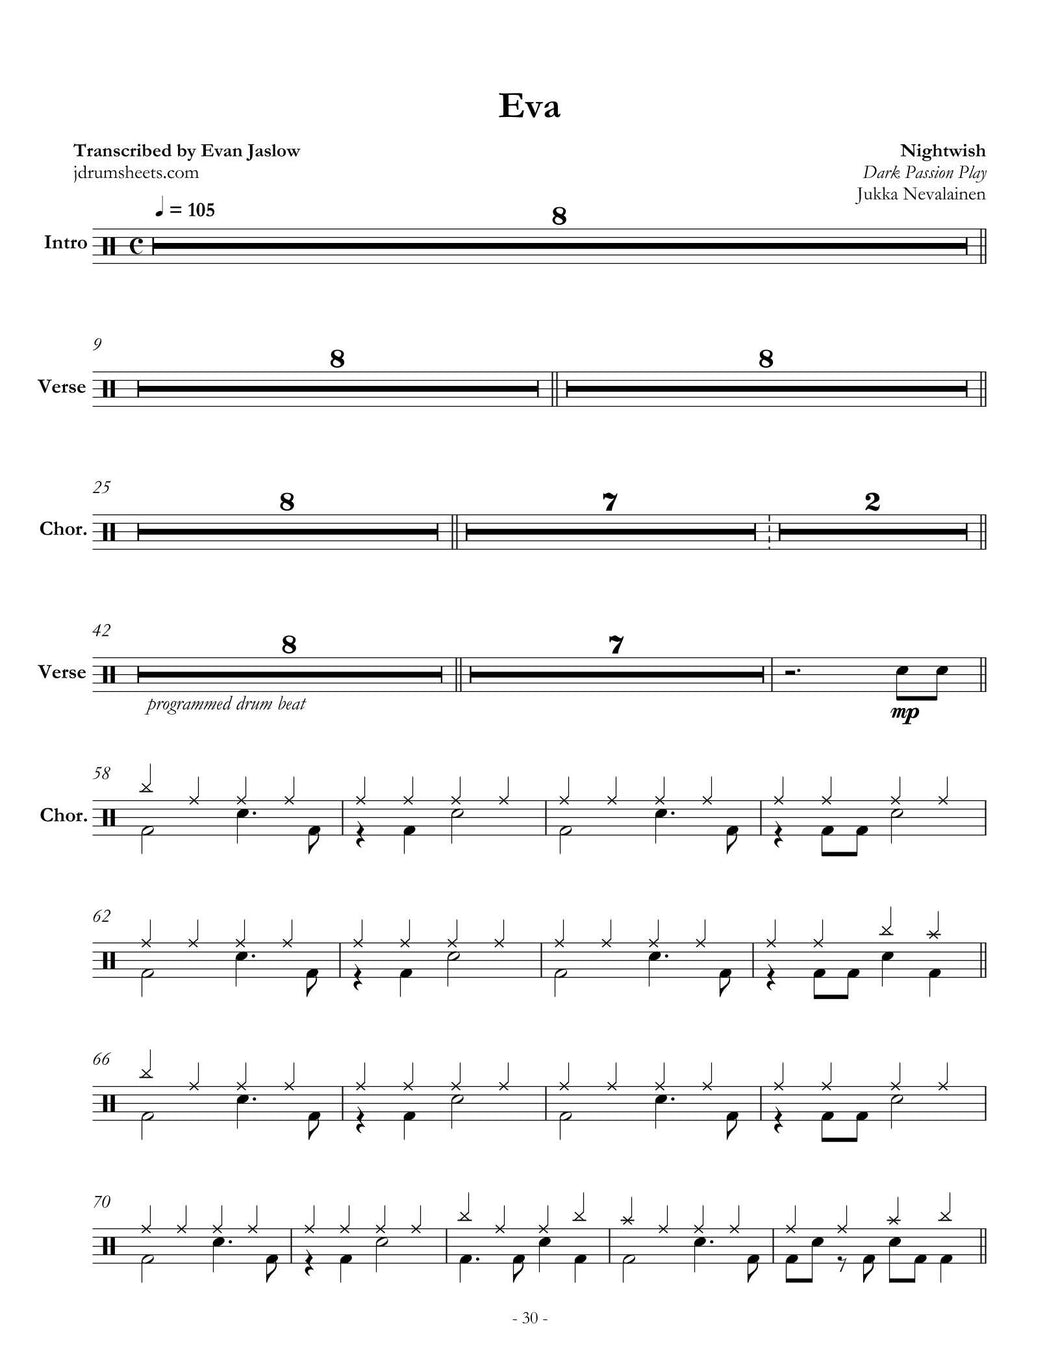 Eva - Nightwish - Full Drum Transcription / Drum Sheet Music - Jaslow Drum Sheets